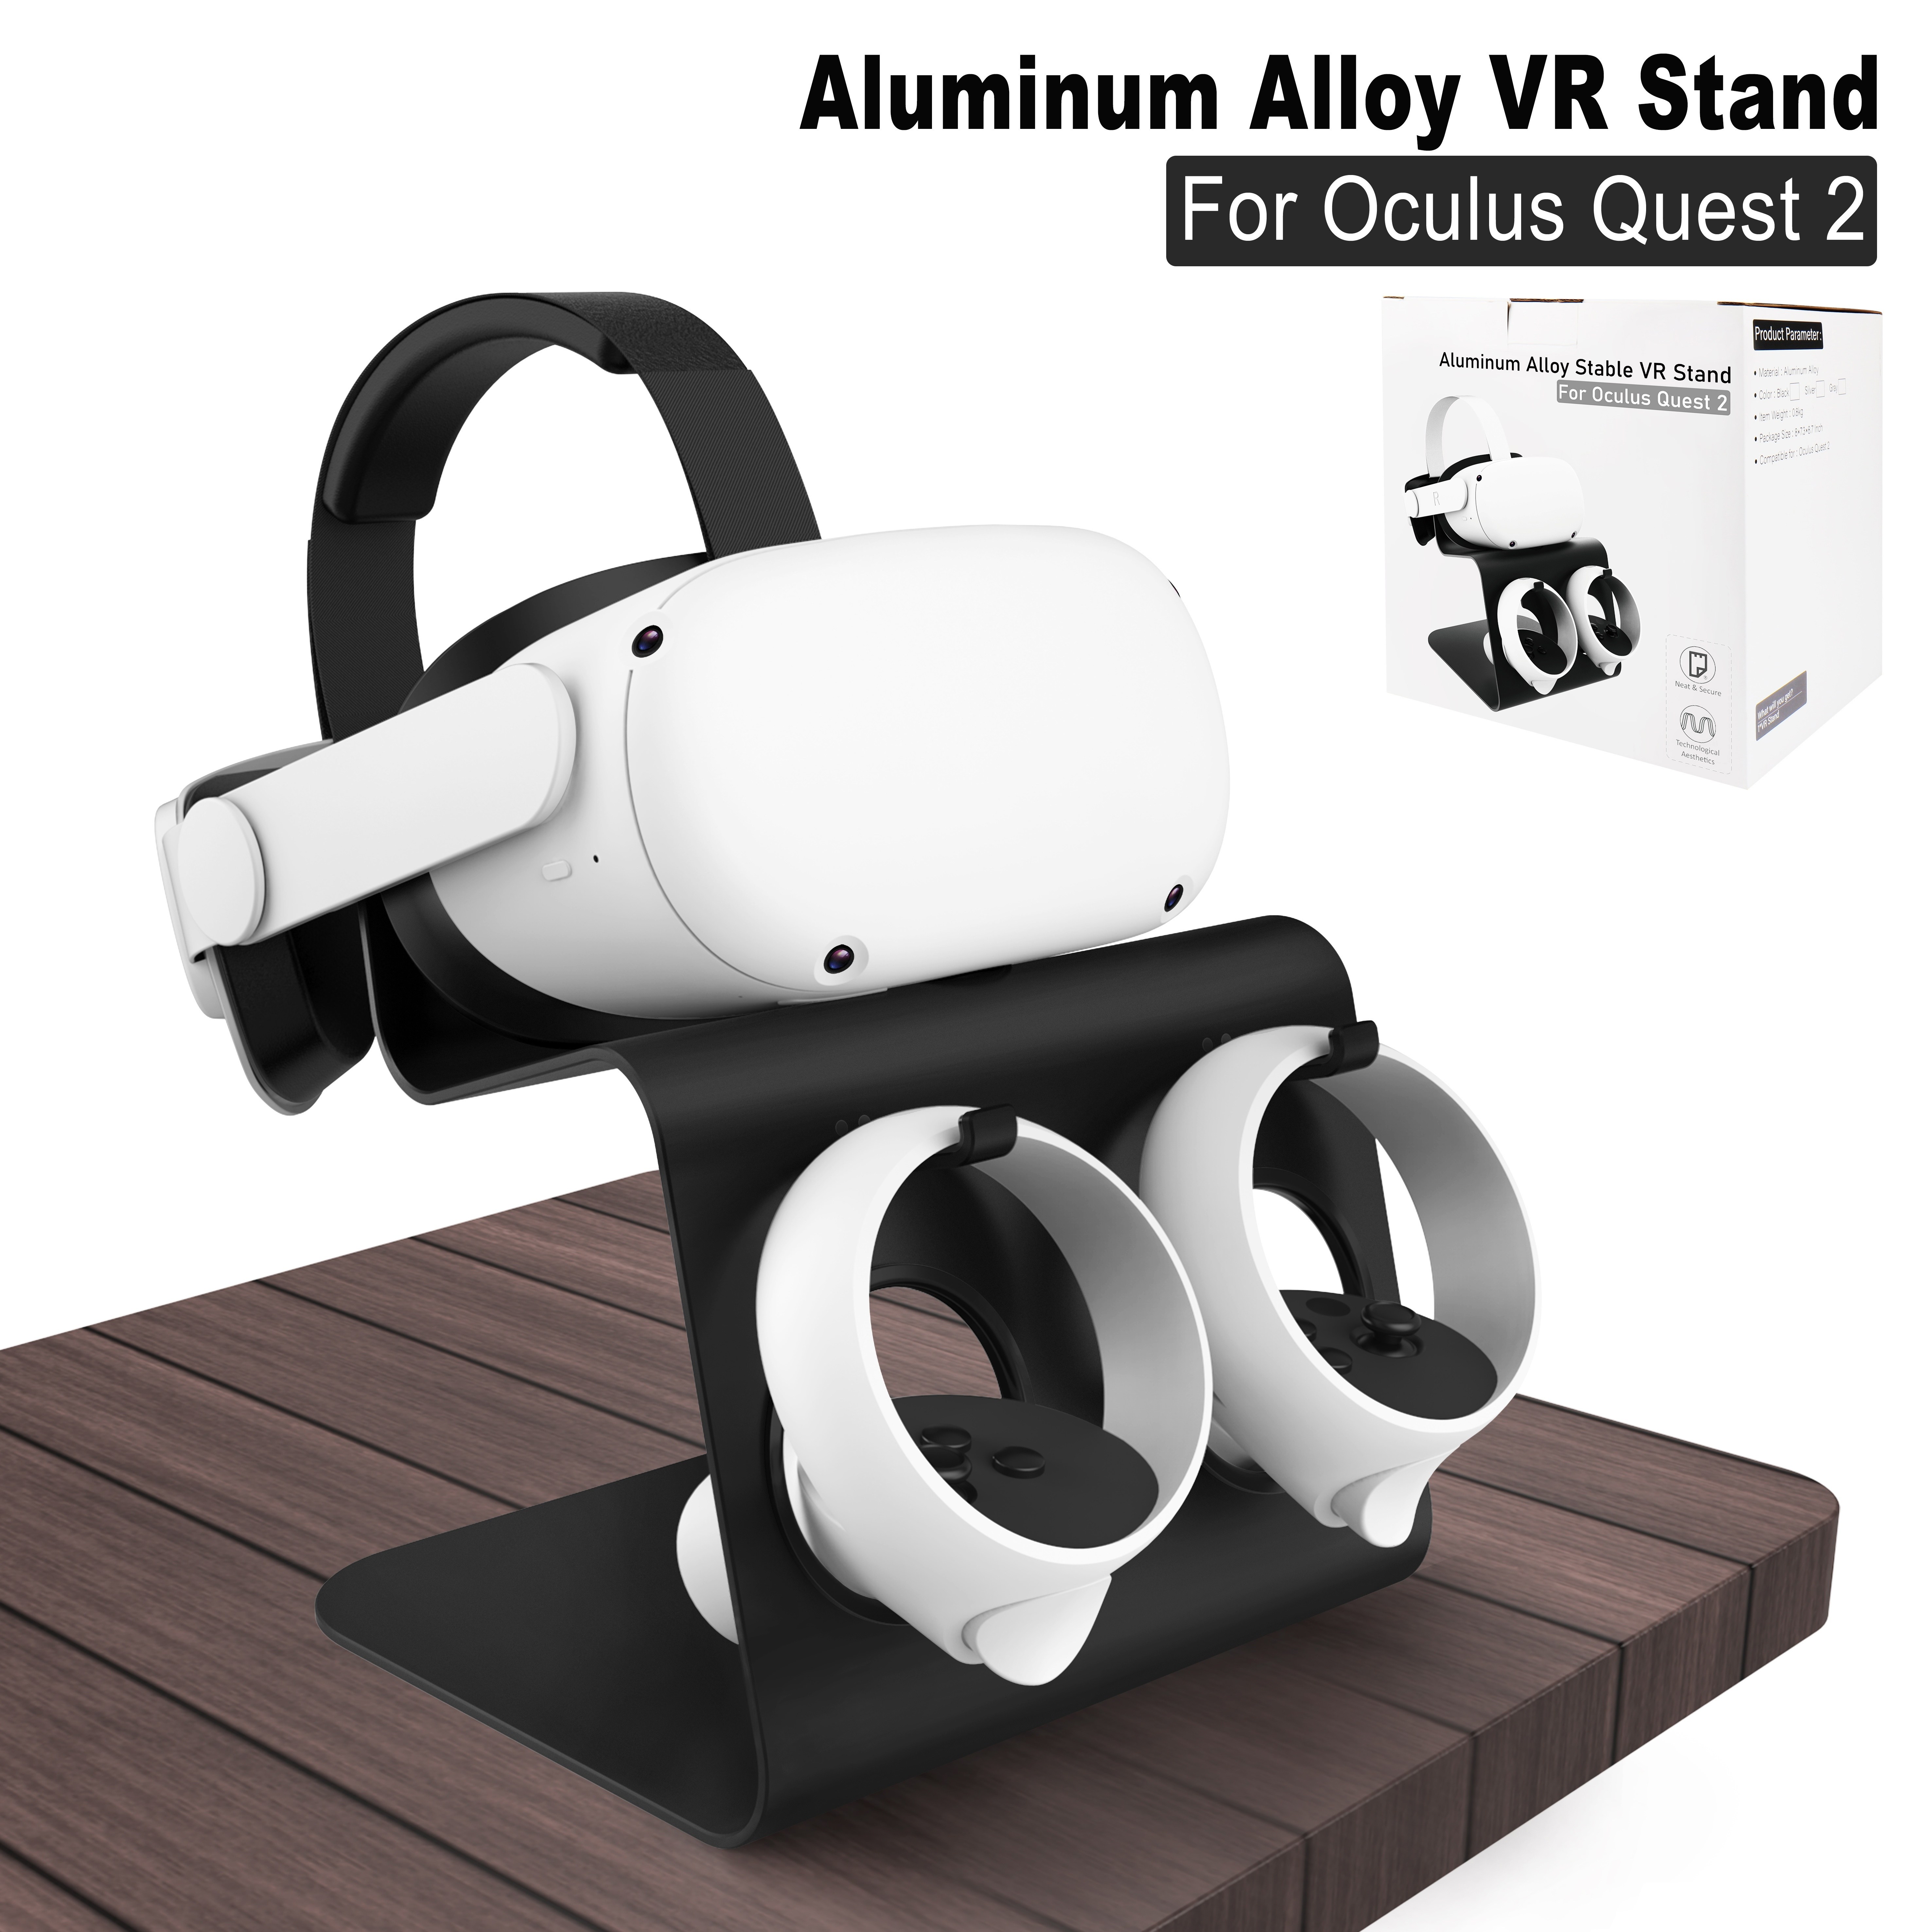 Design VR Stand Accessories Compatible With Quest 2, Oculus Quest2 Pro  ,Aluminum Alloy Desktop Stand (Black)